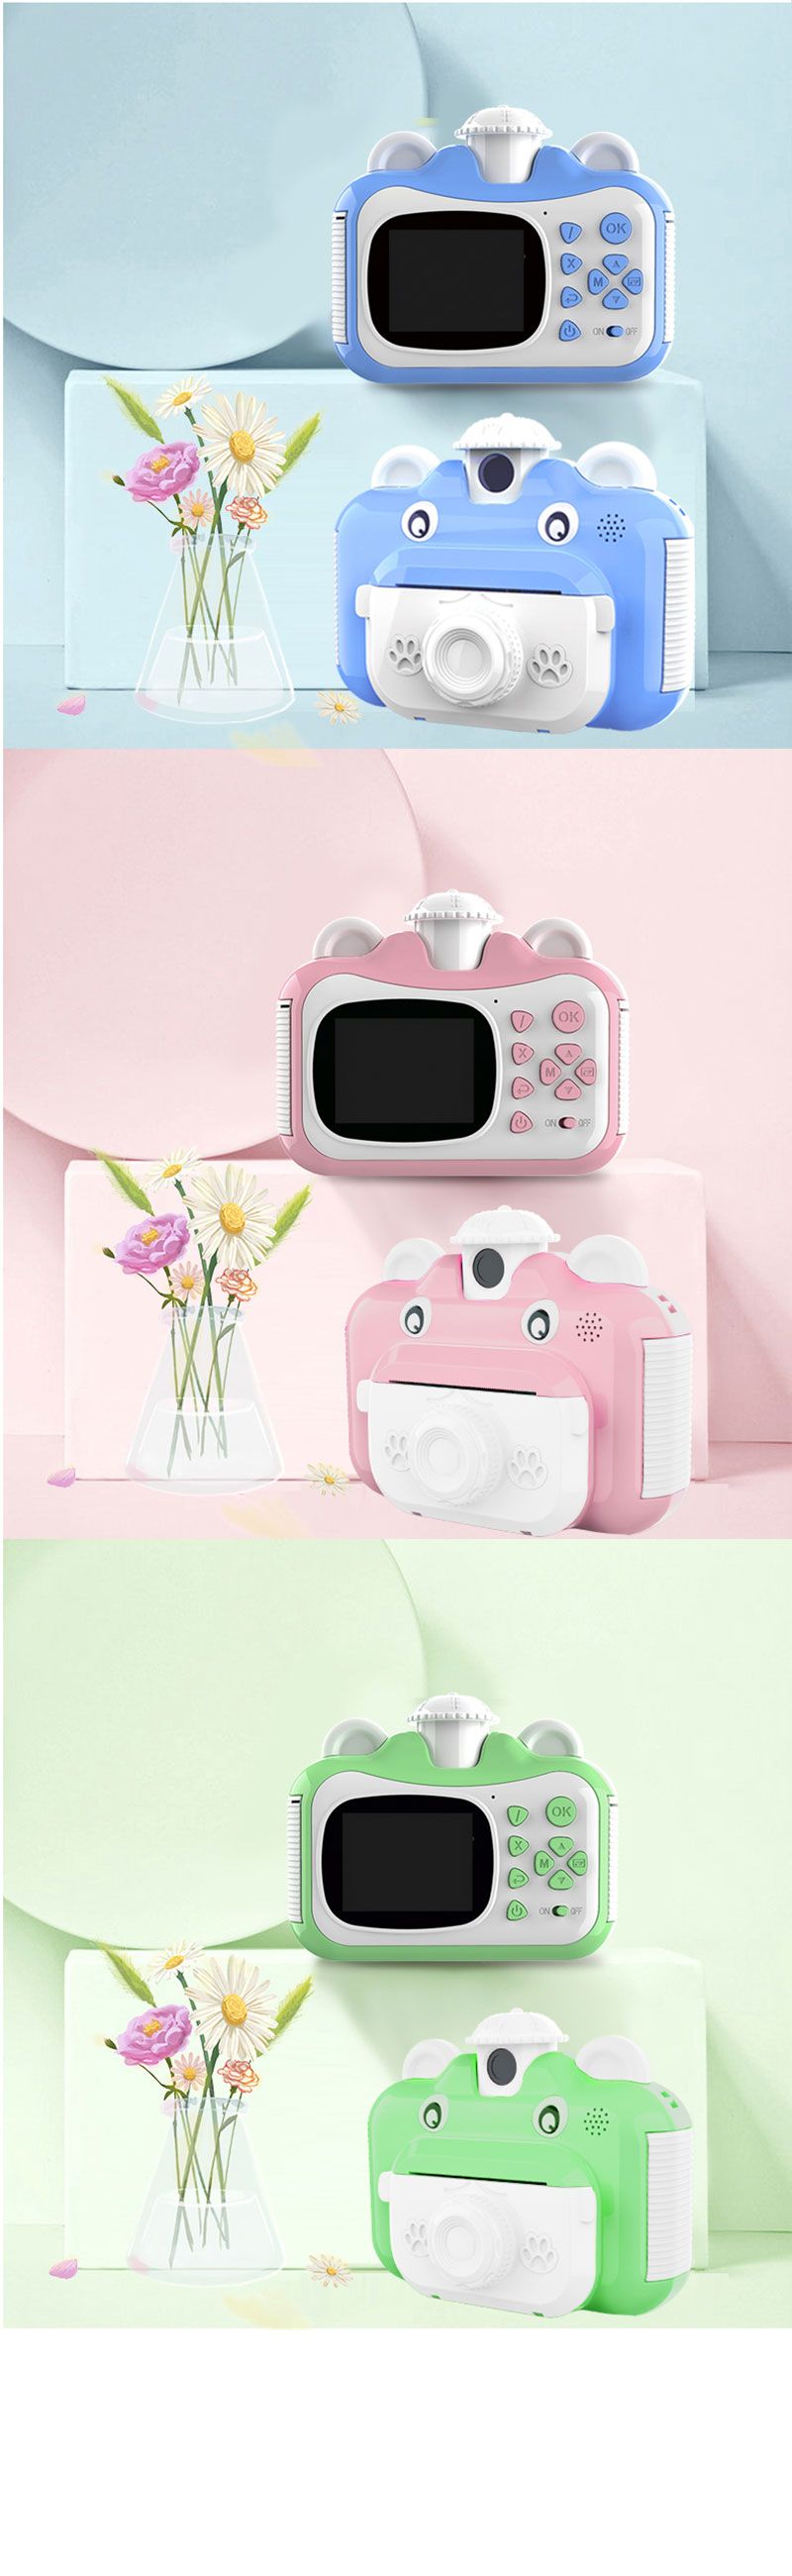 Pickwoo-Mini-Digital-Camera-for-Kids-Baby-Childrens-Toys-Photo-Instant-Print-Camera-Birthday-Gift-1734752